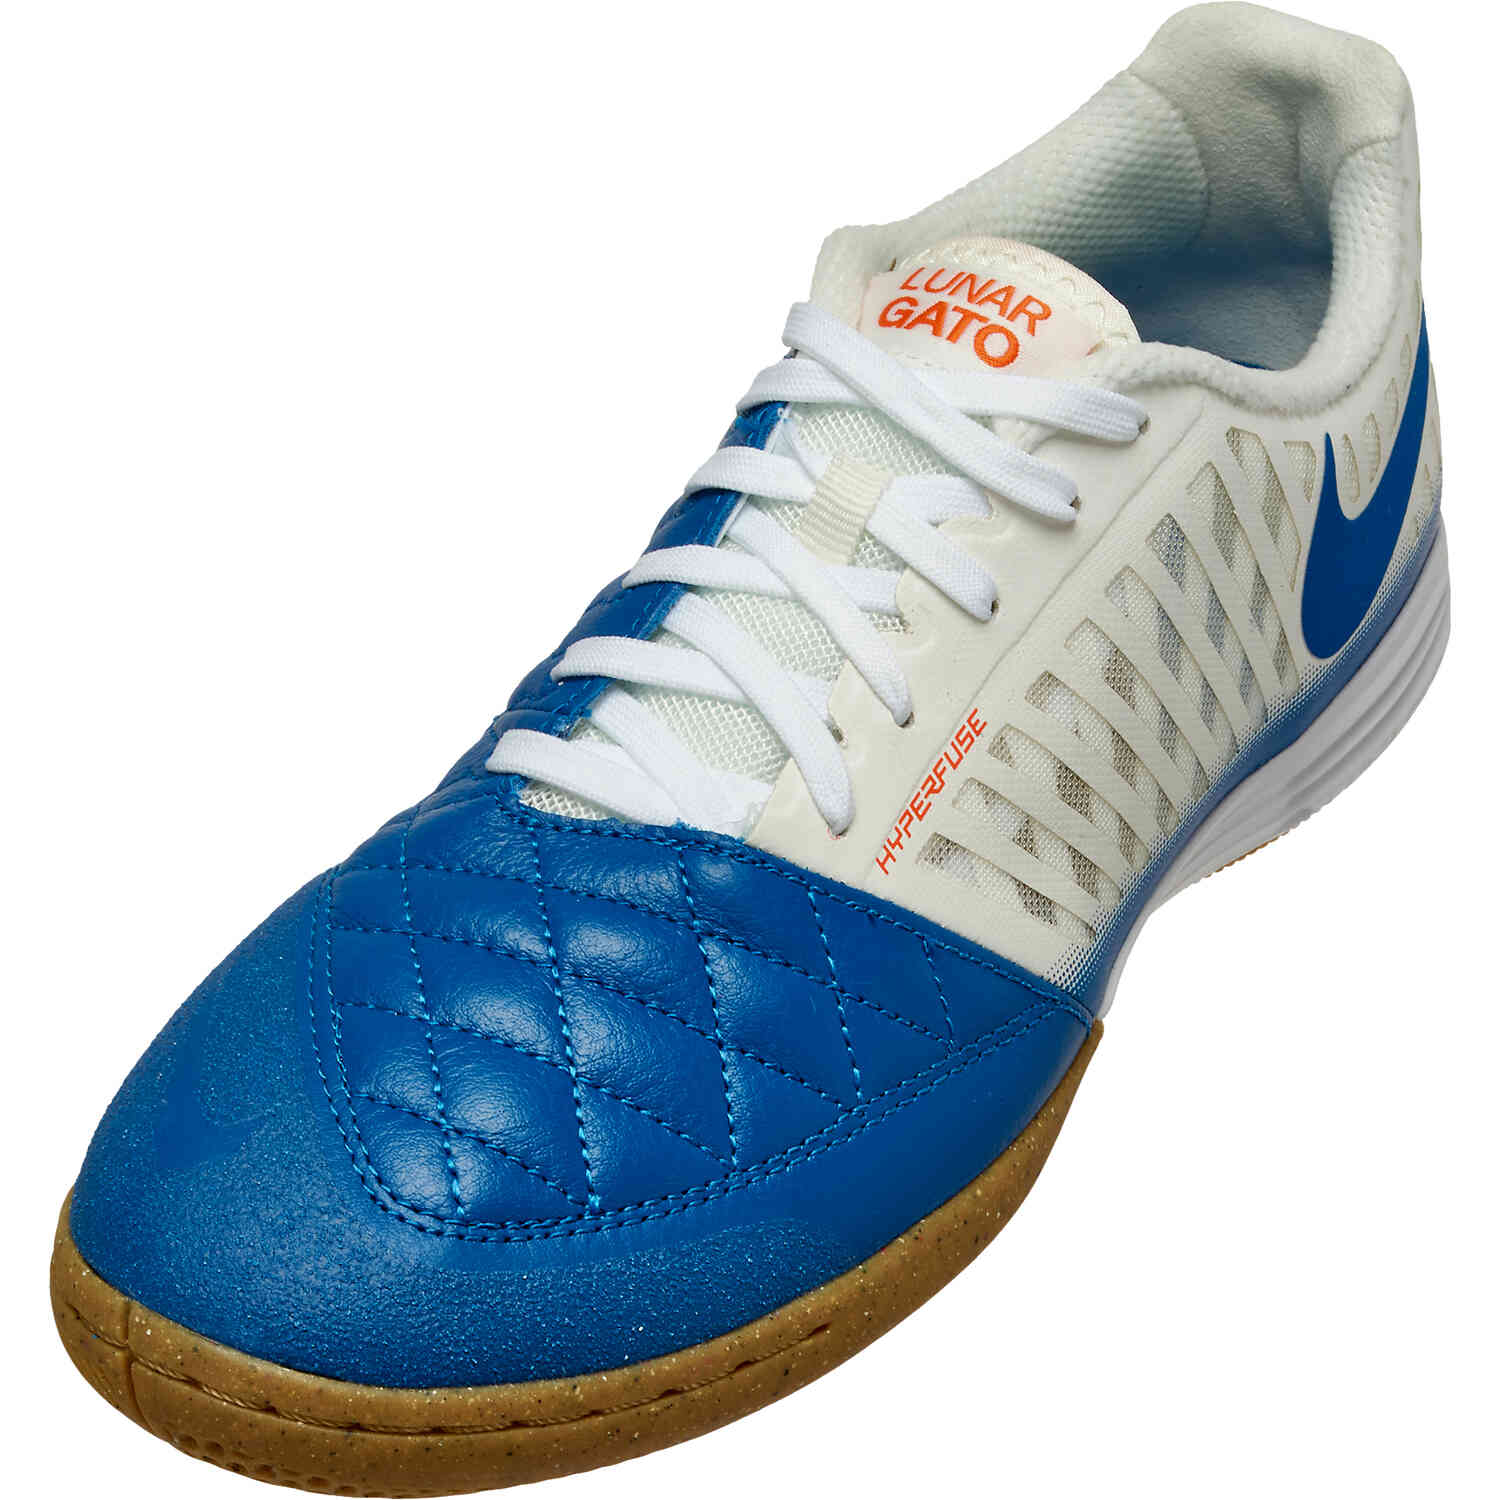 Nike Lunar II IC Indoor Soccer Shoes - Sail, Blue Jay - Soccer